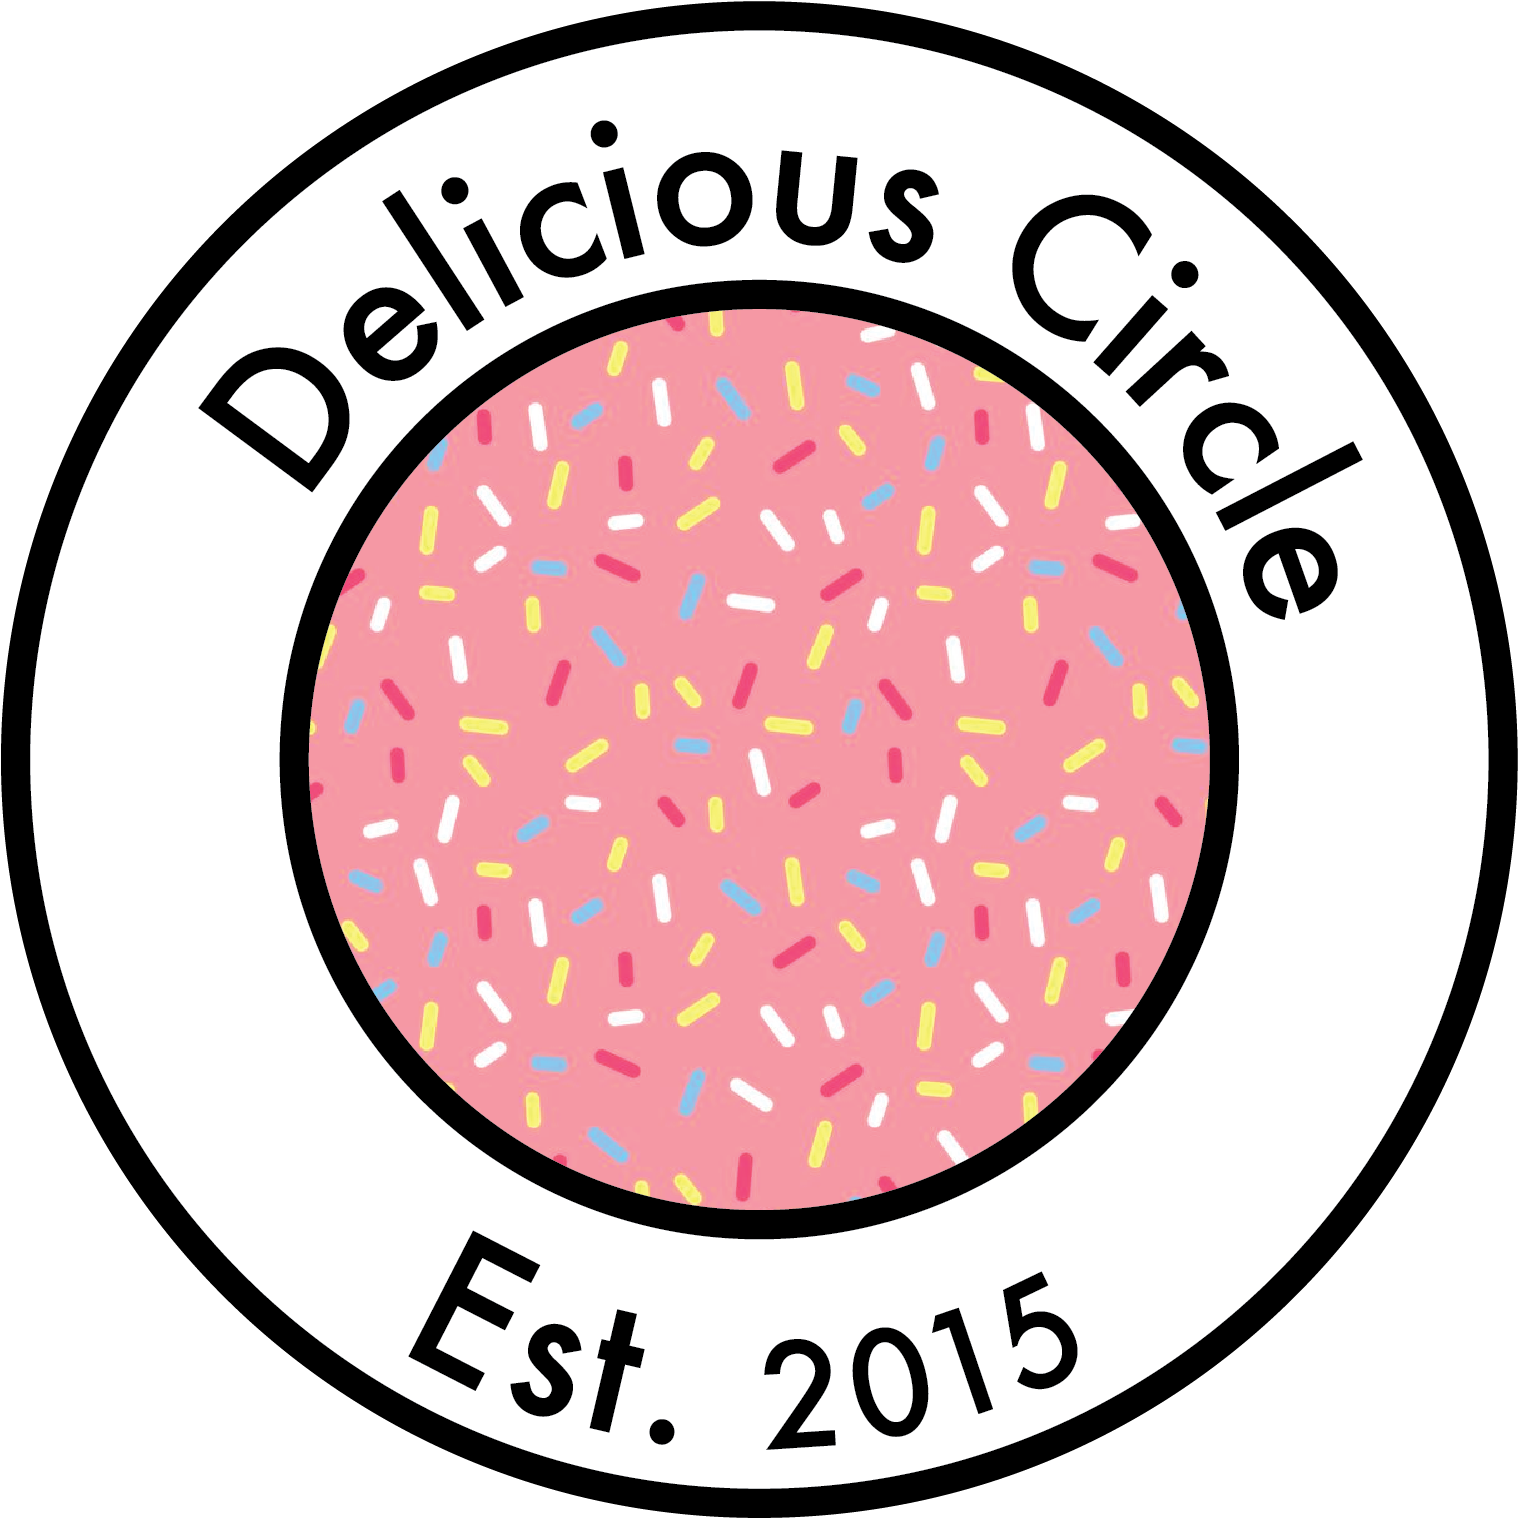 Delicious Circle Baking - Baking (1517x1773)